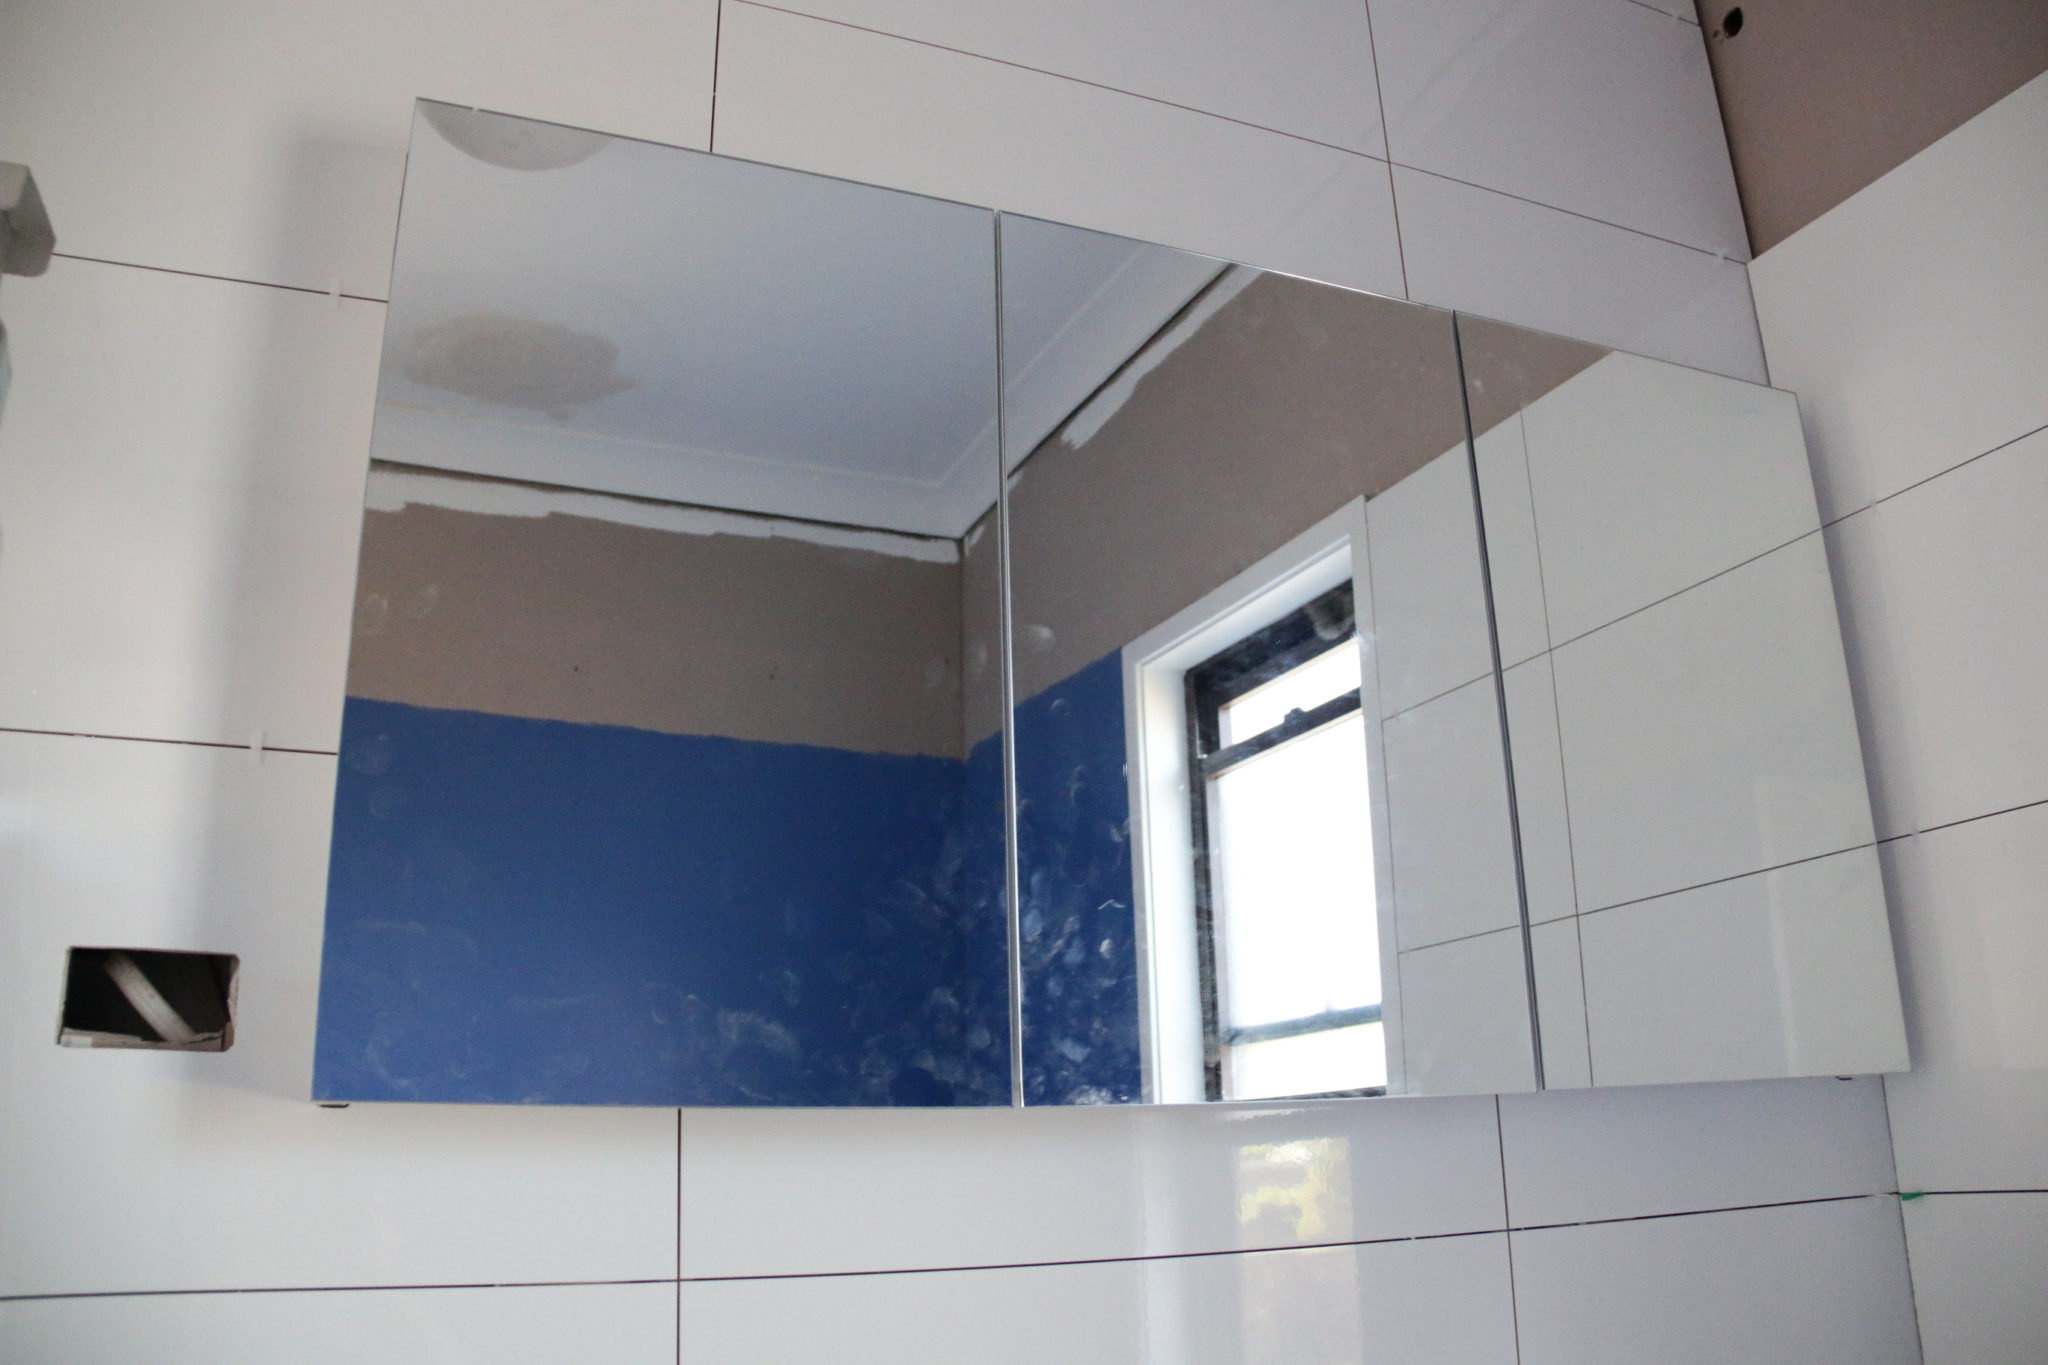 The Rapid Renovation Challenge - Complete bathroom overhaul